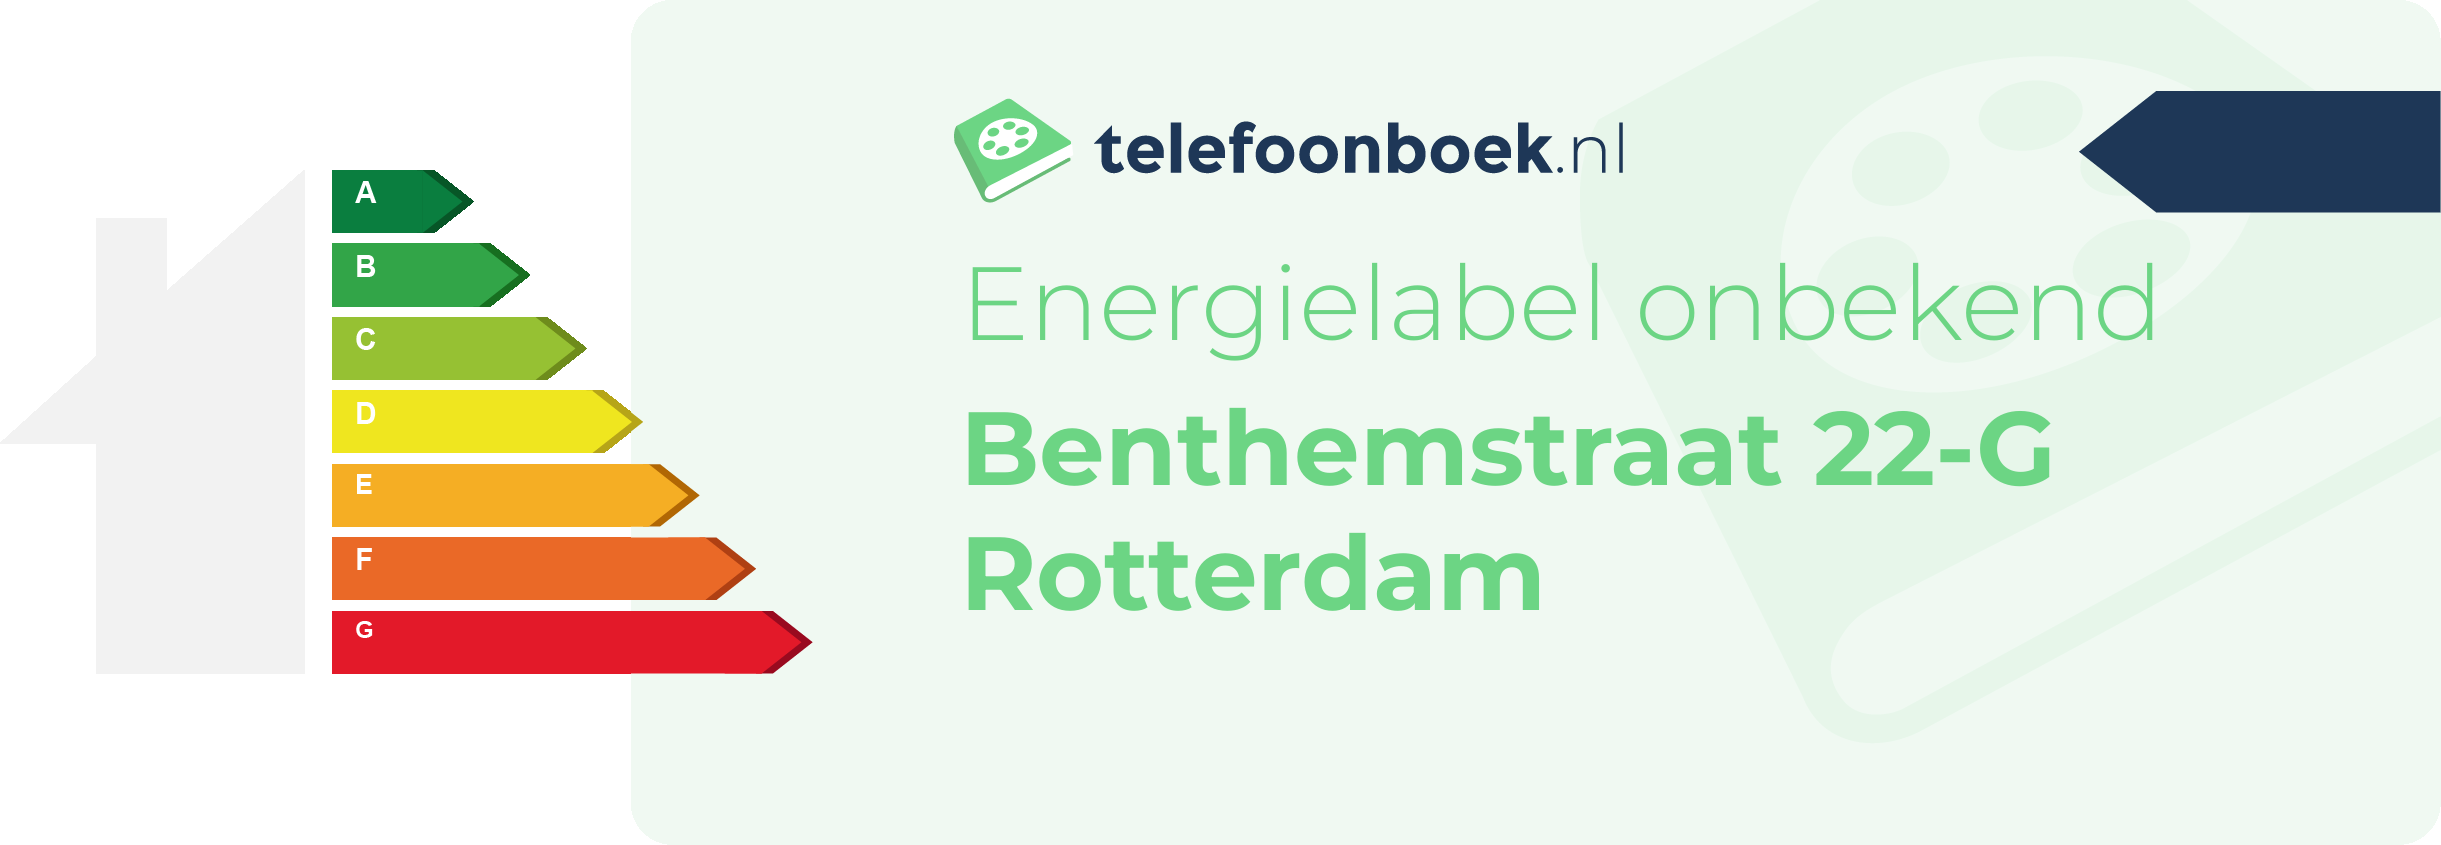 Energielabel Benthemstraat 22-G Rotterdam